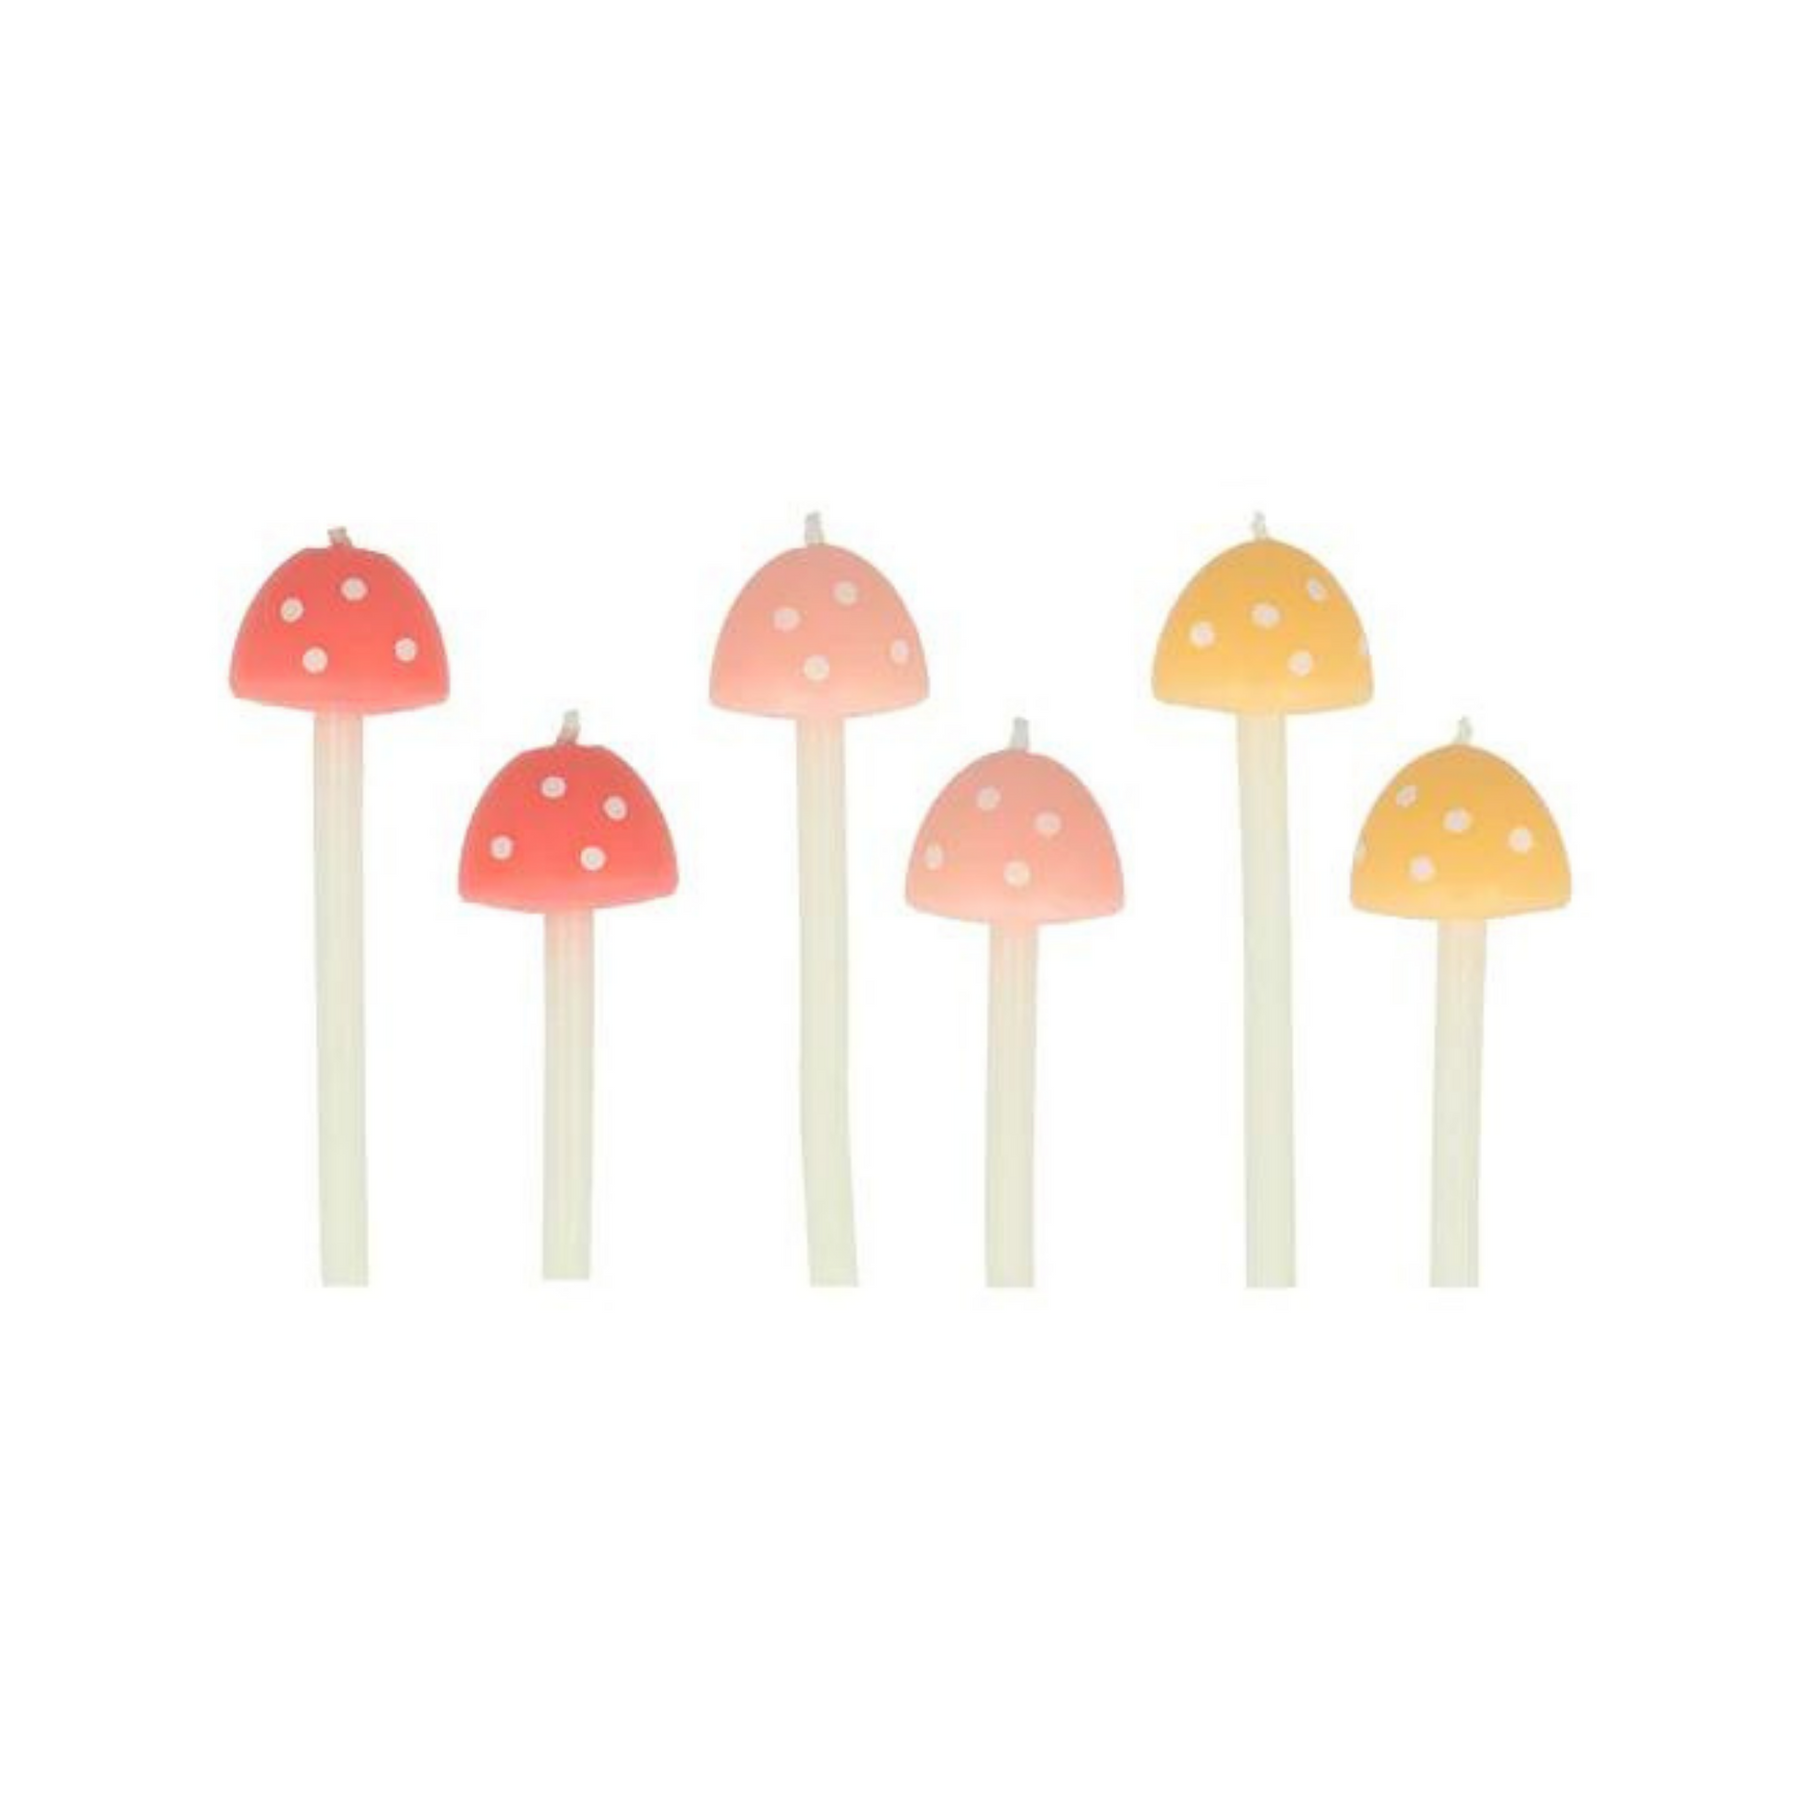 Mushroom Candles